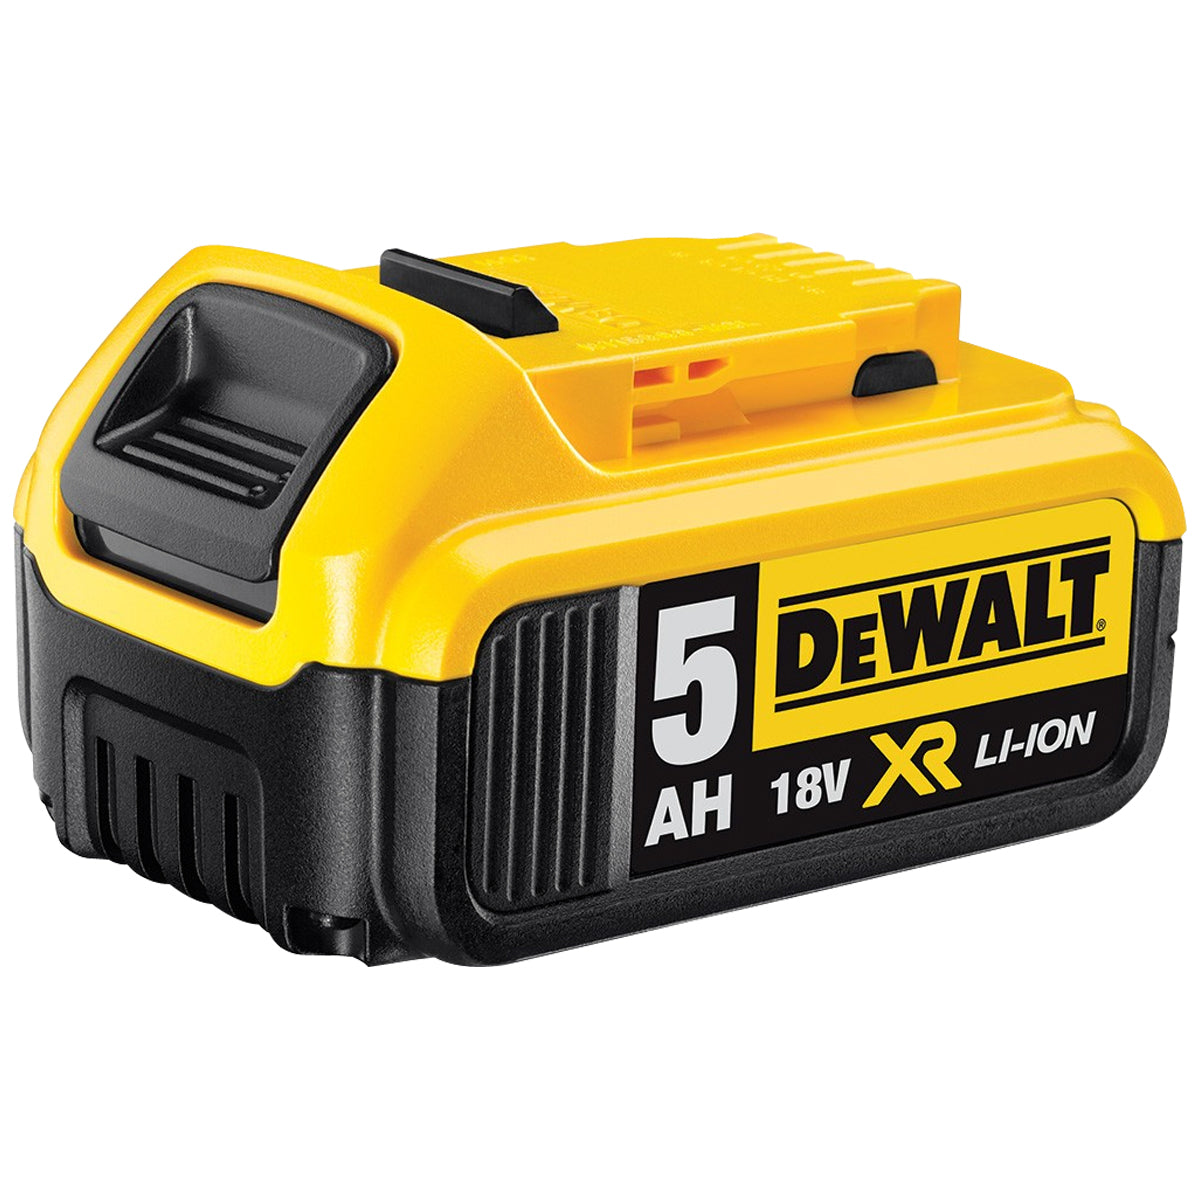 Dewalt DCK755P3T 18V Brushless 7 Piece Power Tool Kit with 3 x 5.0Ah Batteries